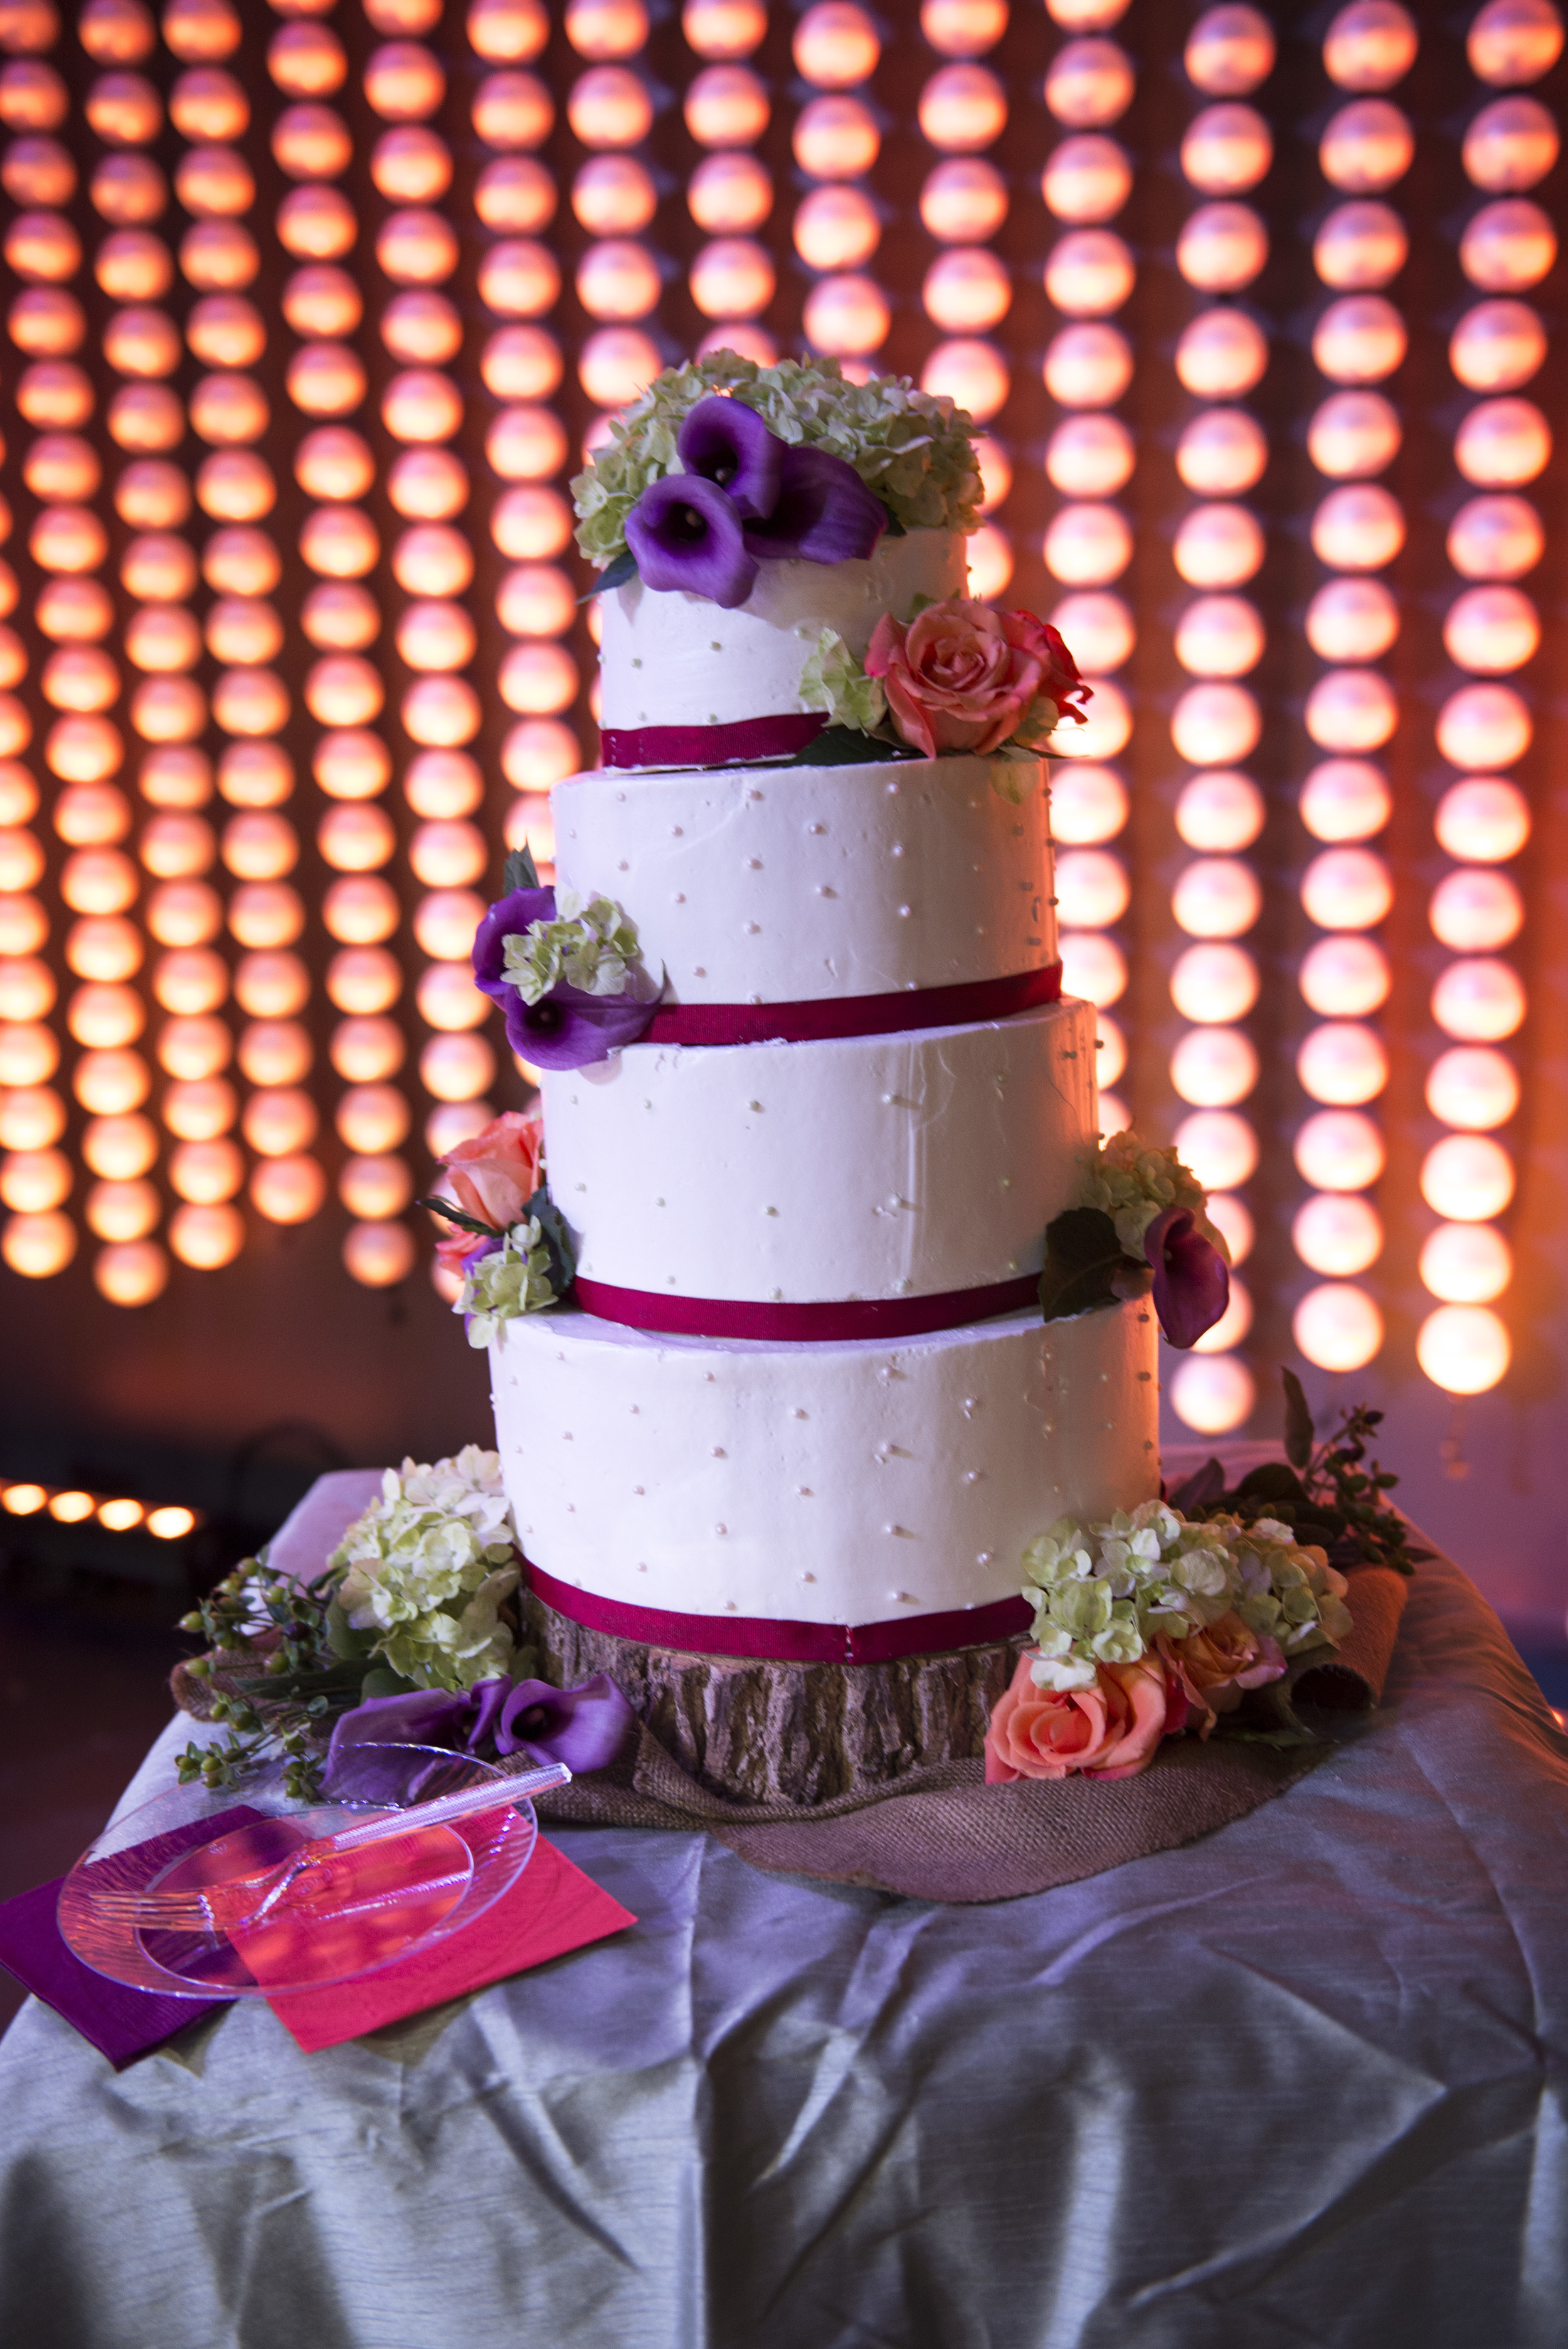 Details about   Pair Couple-Wedding-Cake favors-decorations-marks table show original title